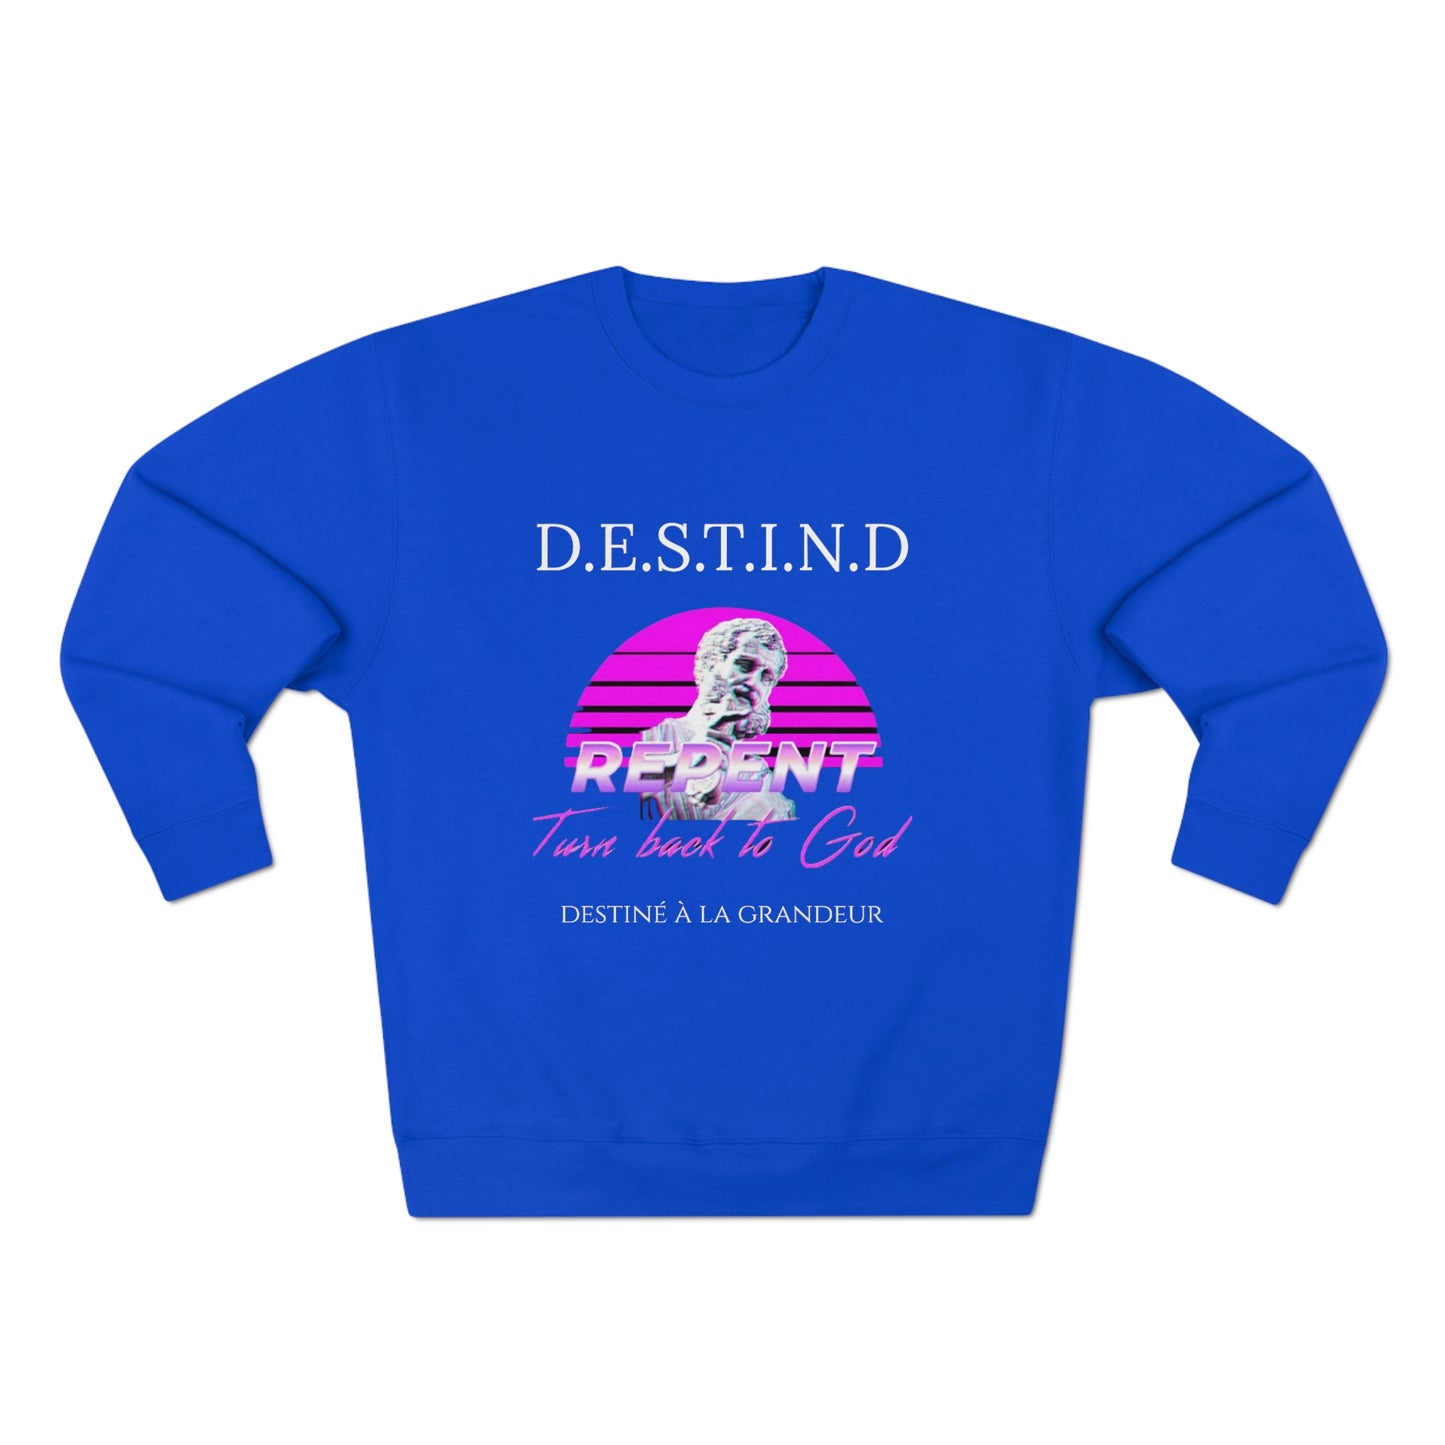 “D.E.S.T.I.N.D” Unisex Premium Crewneck Sweatshirt